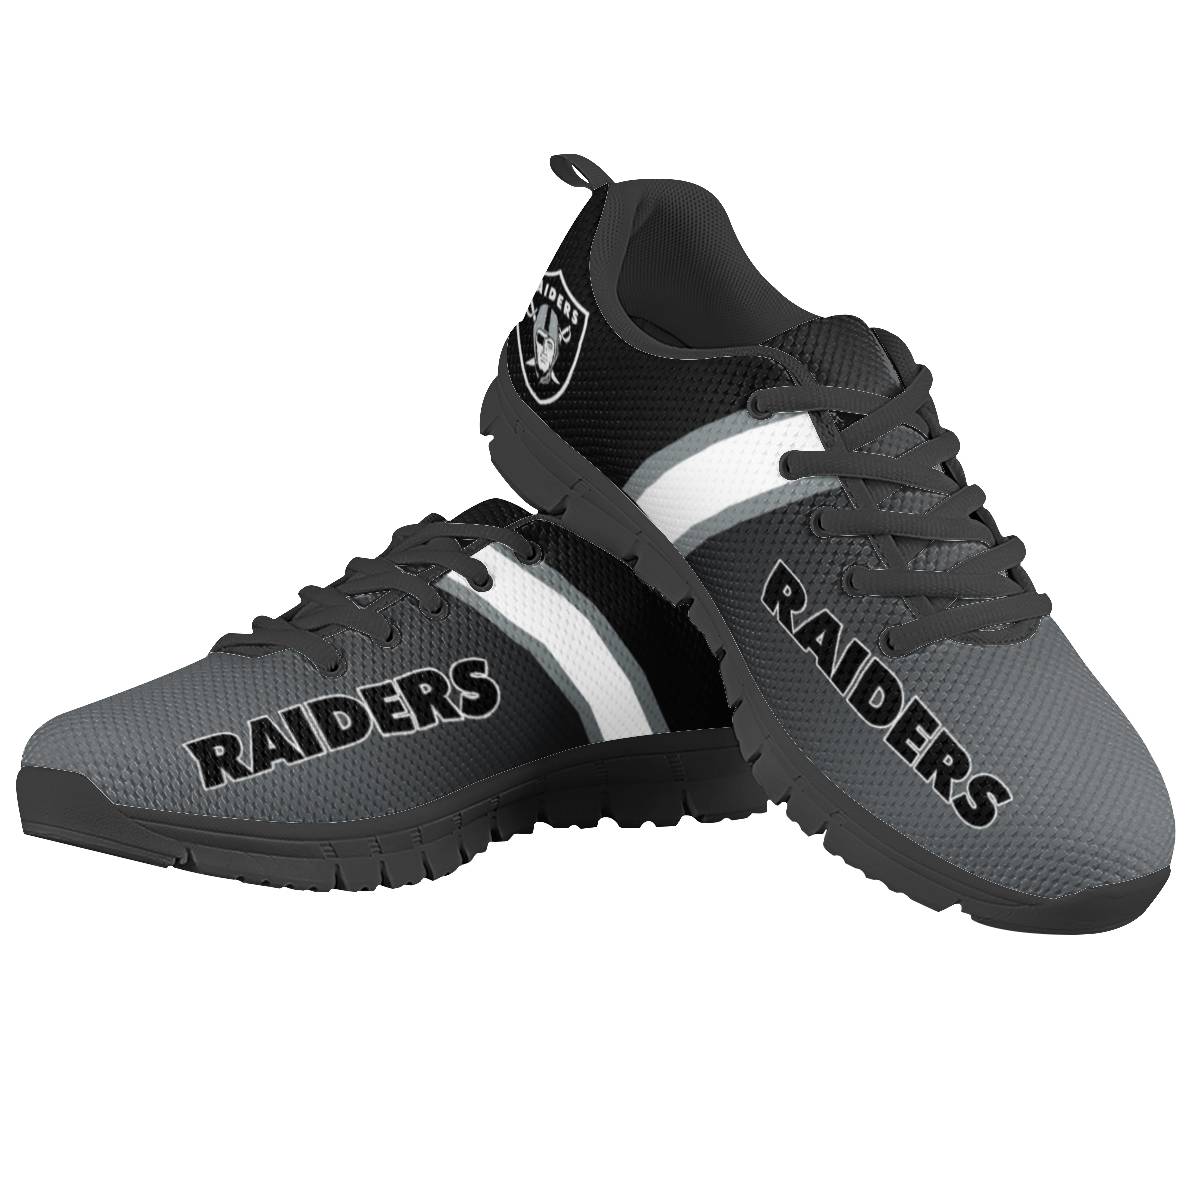 Women's Las Vegas Raiders AQ Running Shoes 002